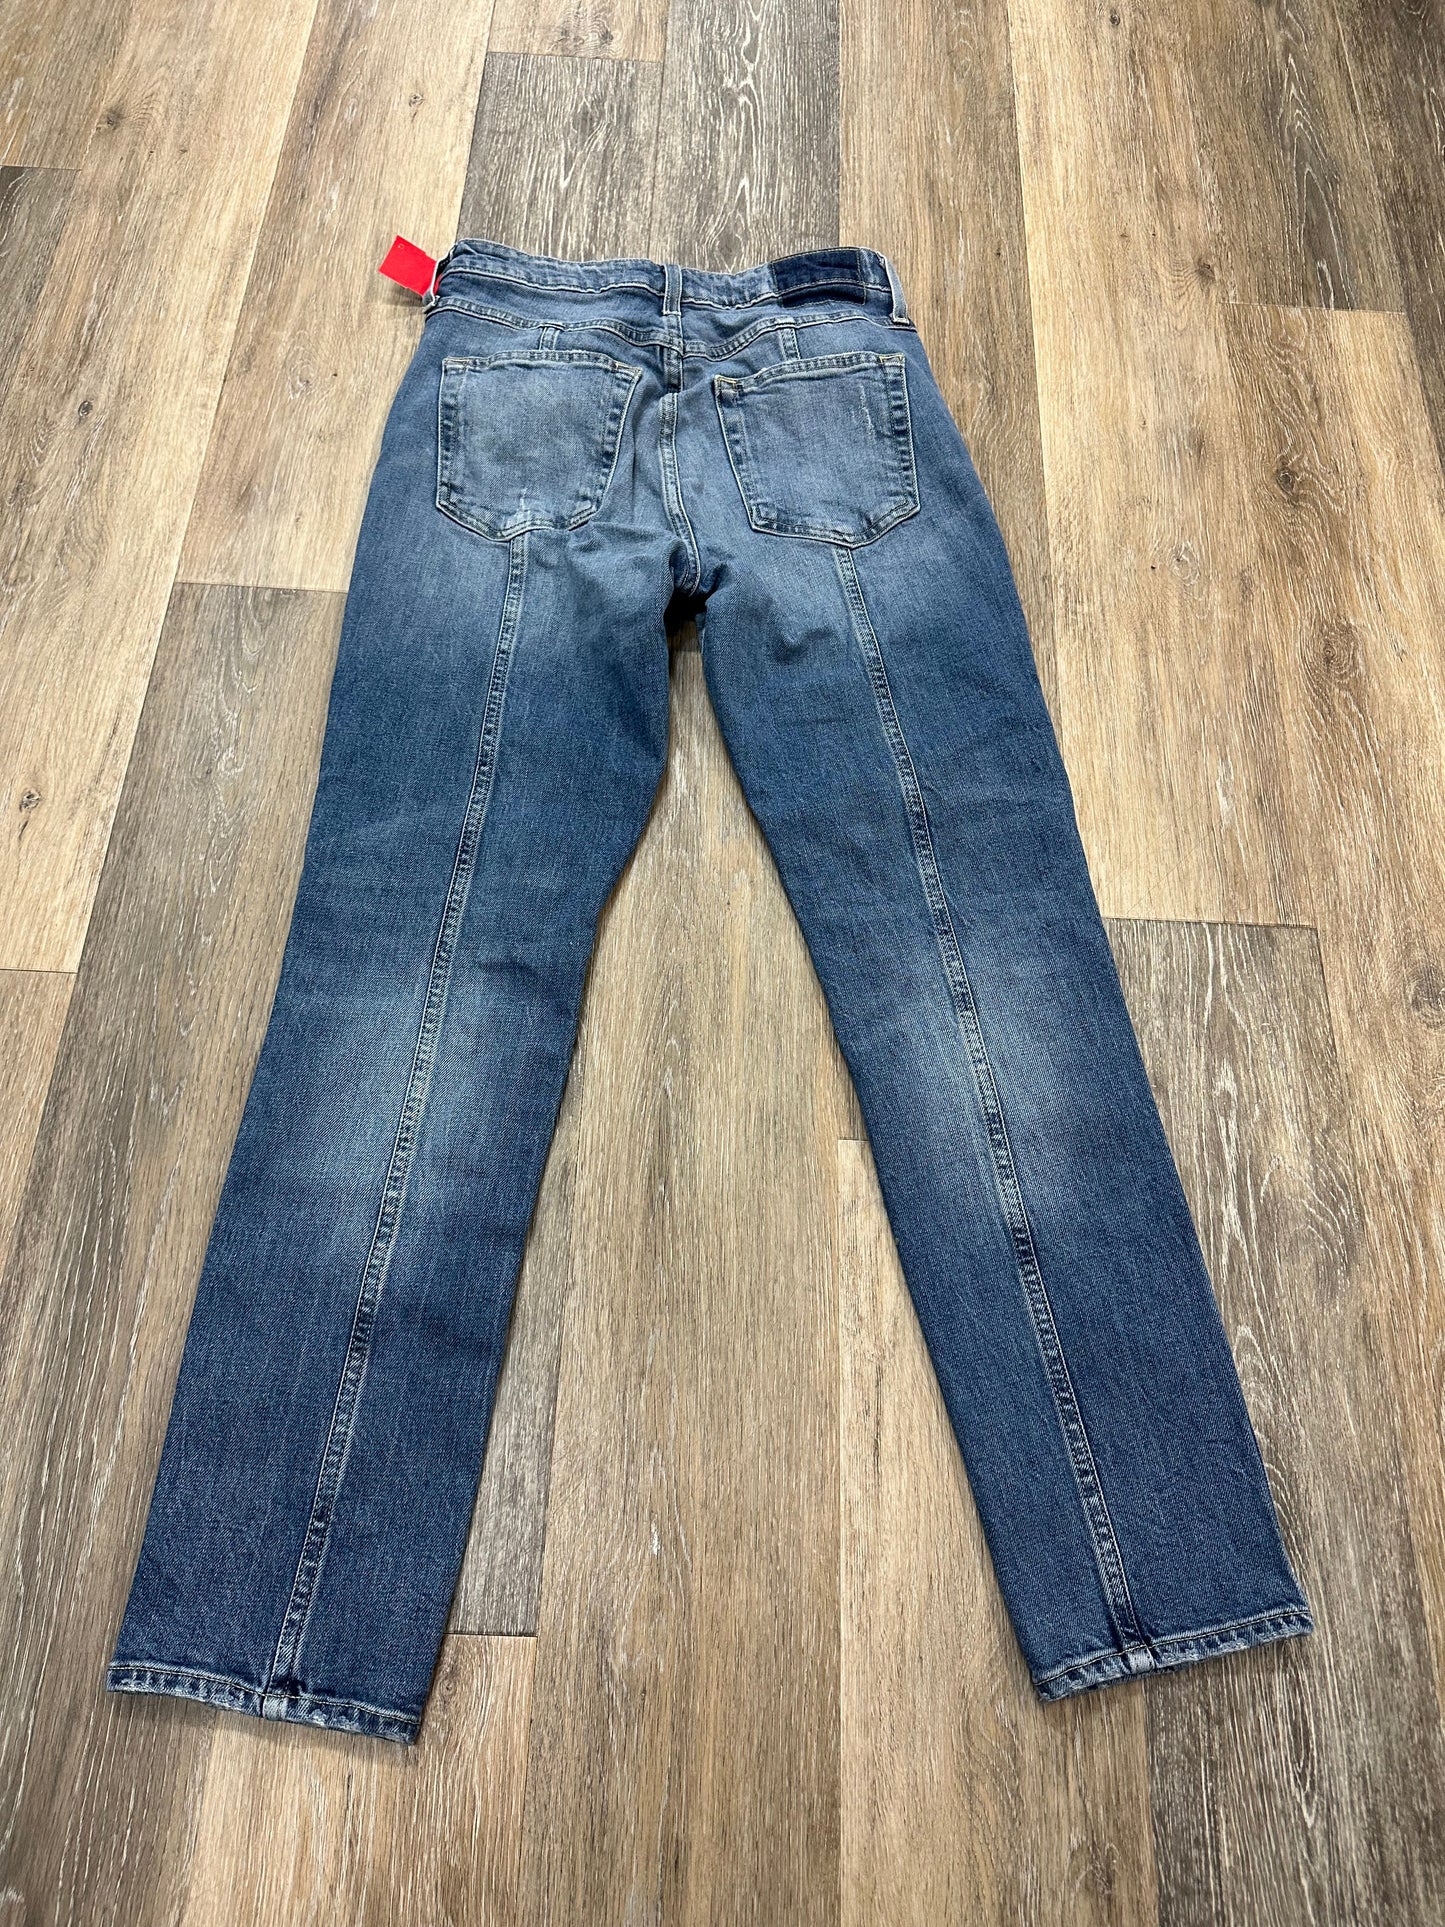 Jeans Designer By Amo  Size: 4/27